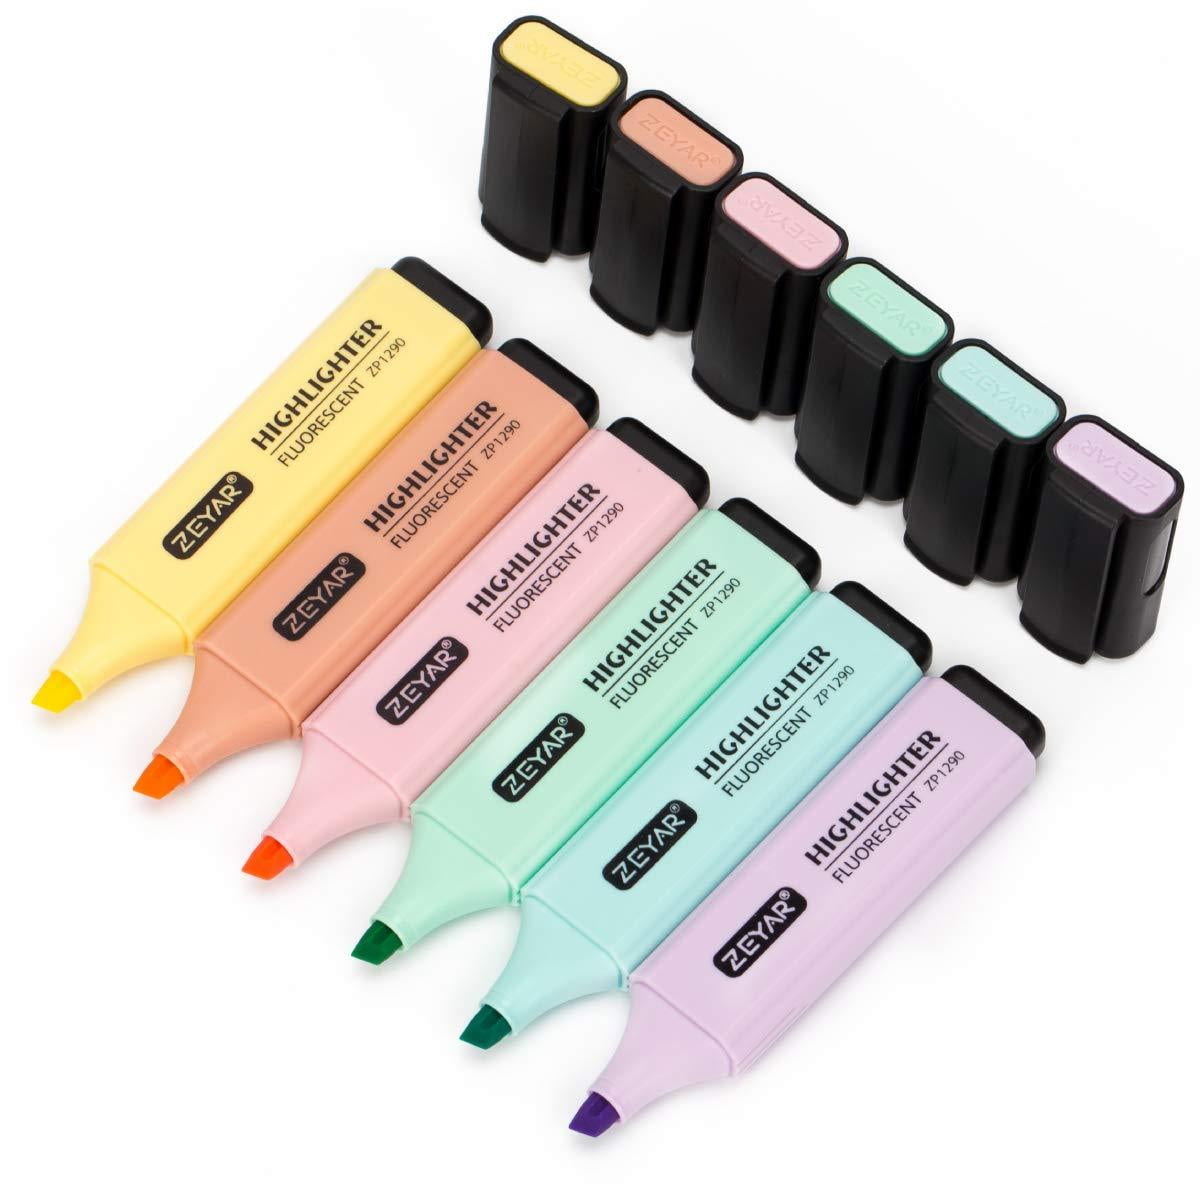 Siser Chisel Tip Sublimation Markers - Pastel Colors - 6 ct